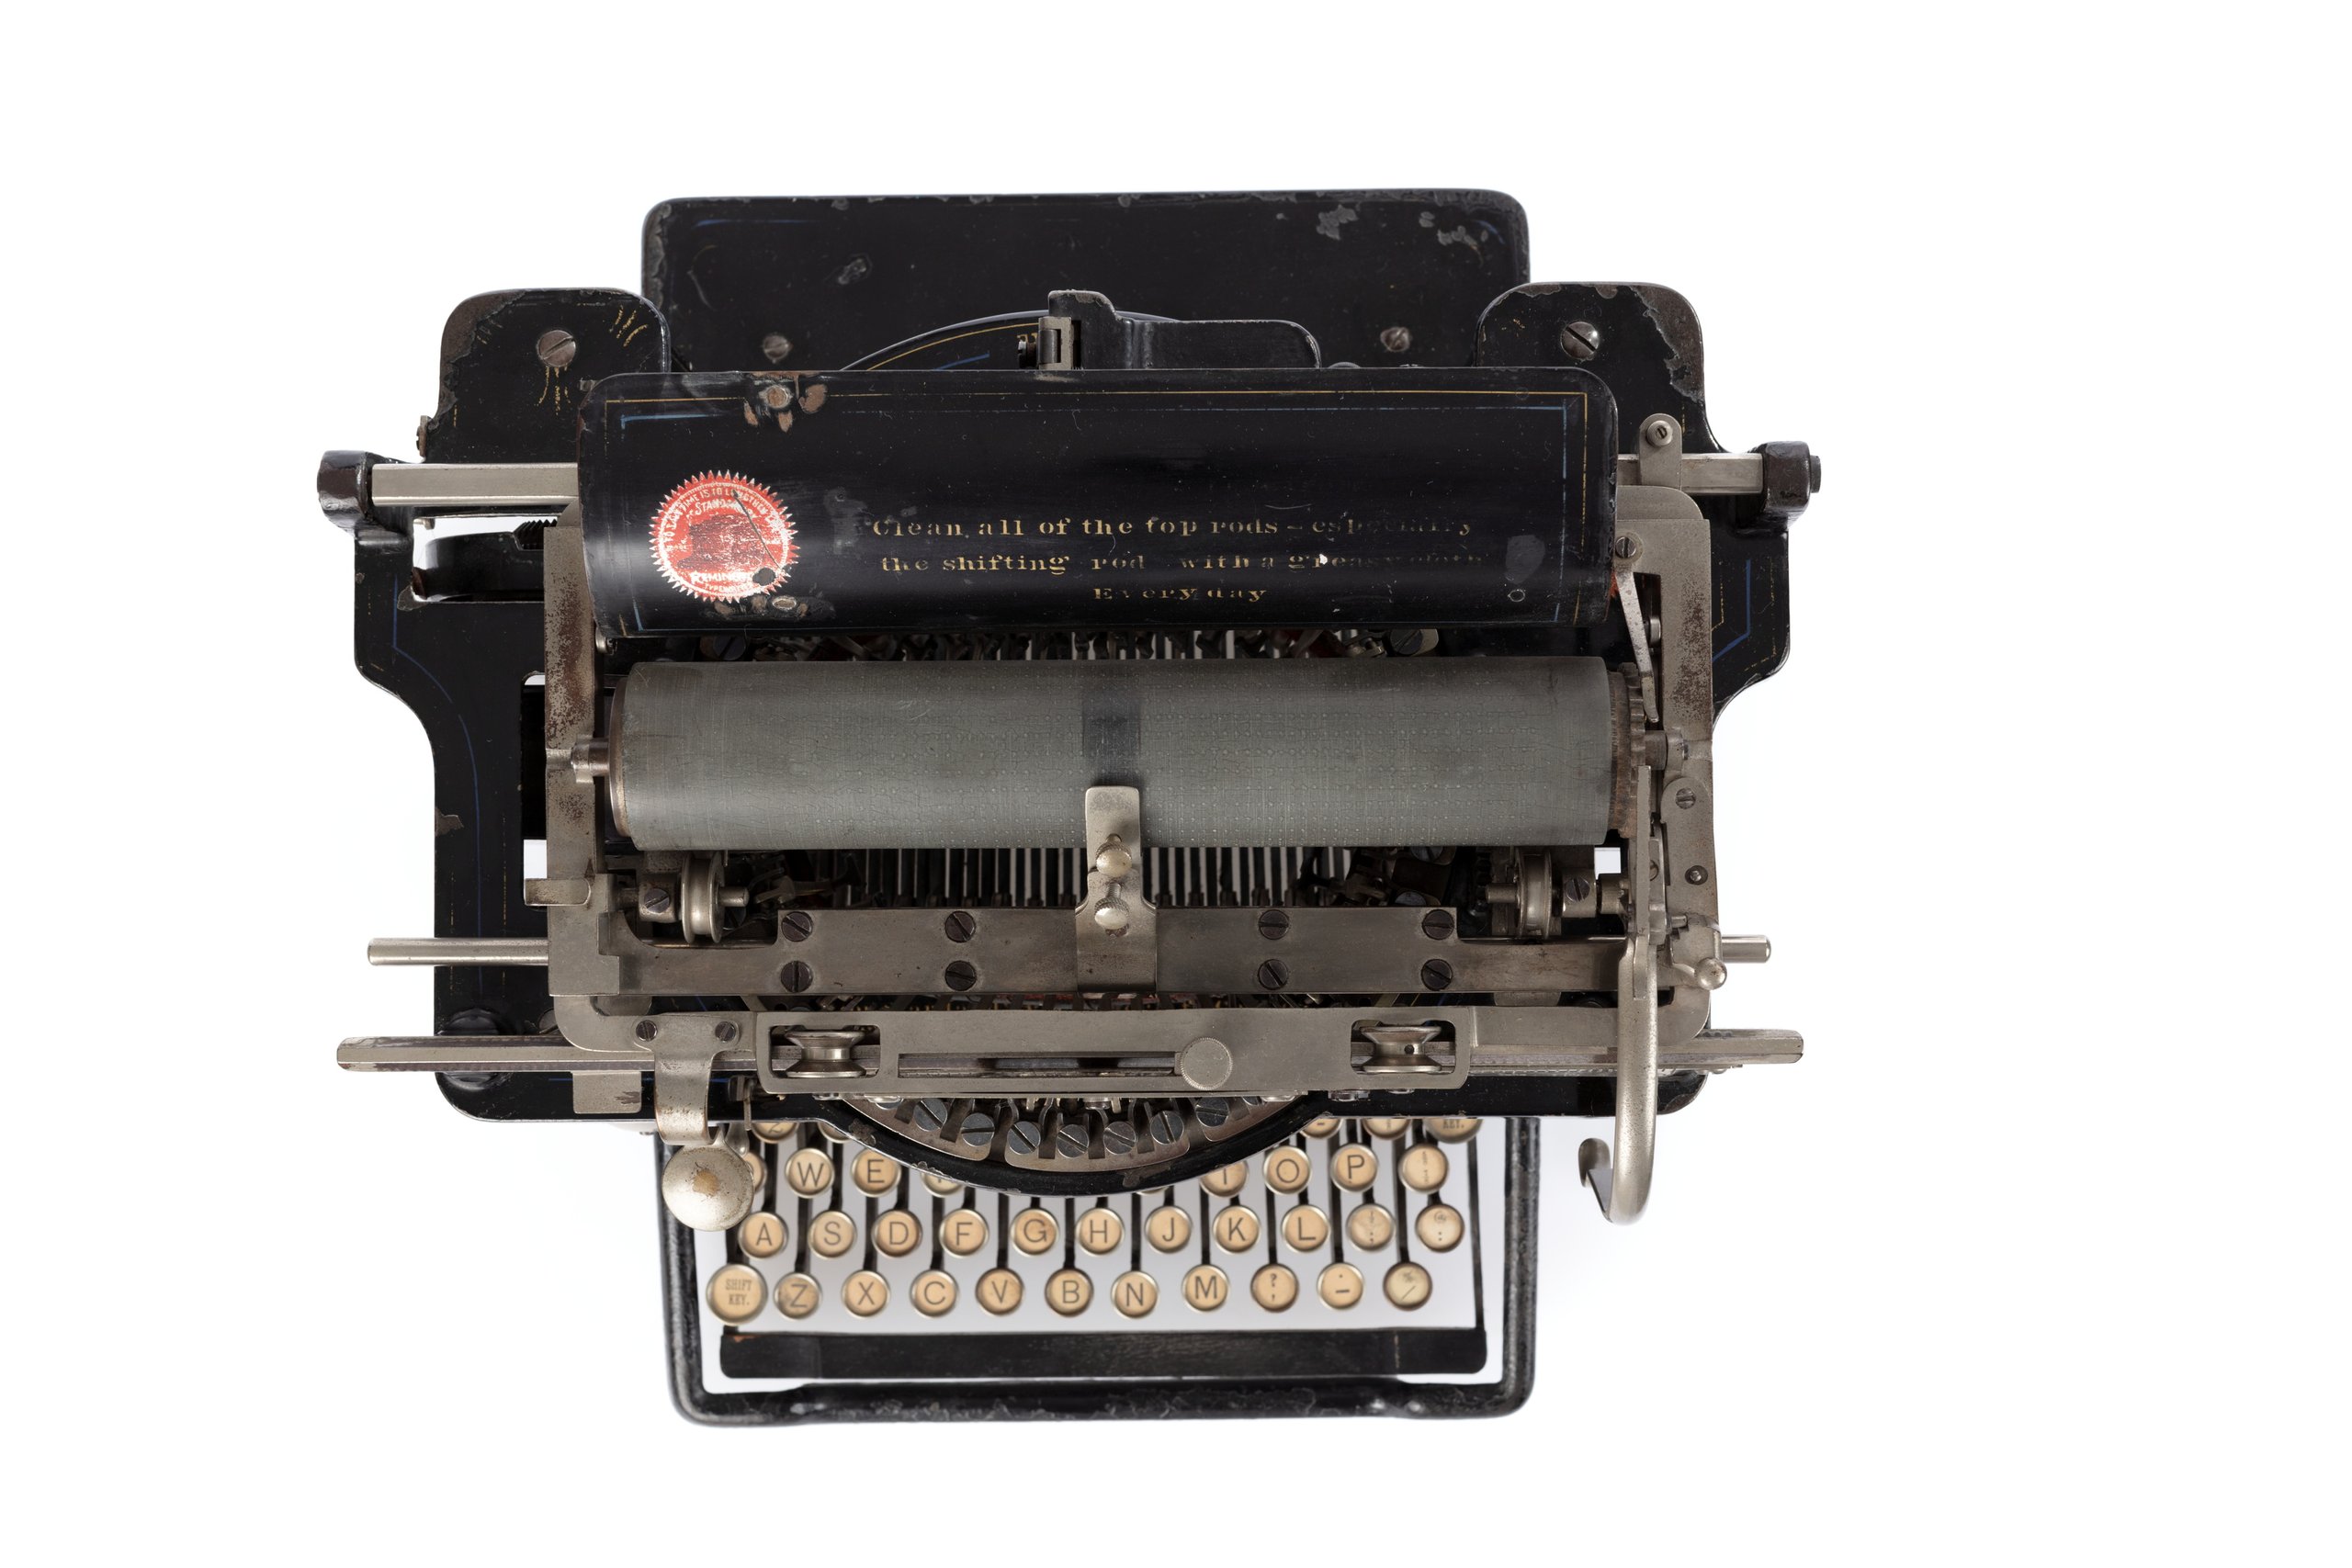 'Remington No. 5' typewriter made by E Remington & Sons